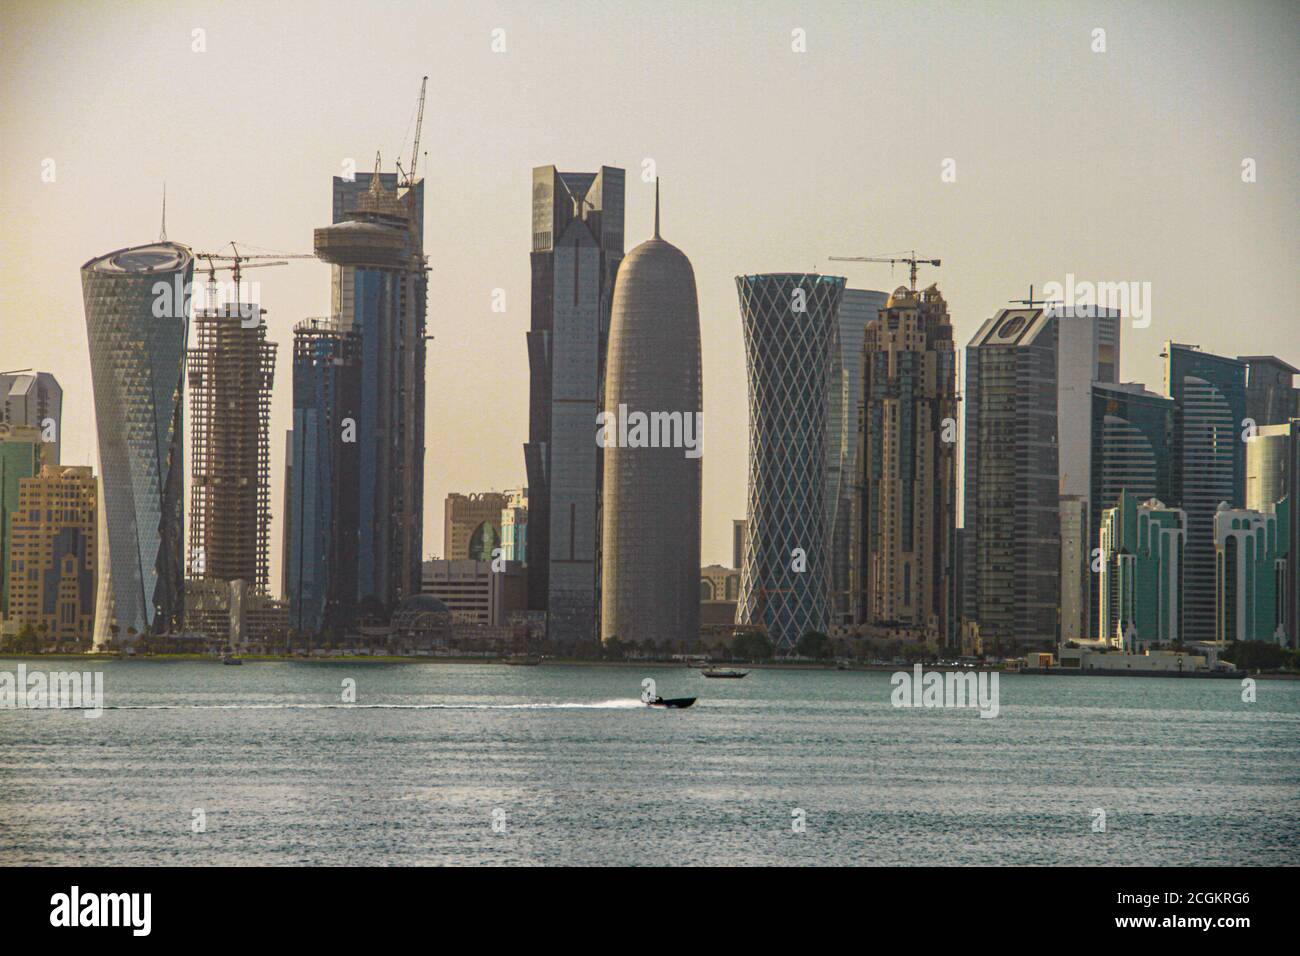 Doha Skyline old Photos , Cornish  of Doha Qatar Stock Photo